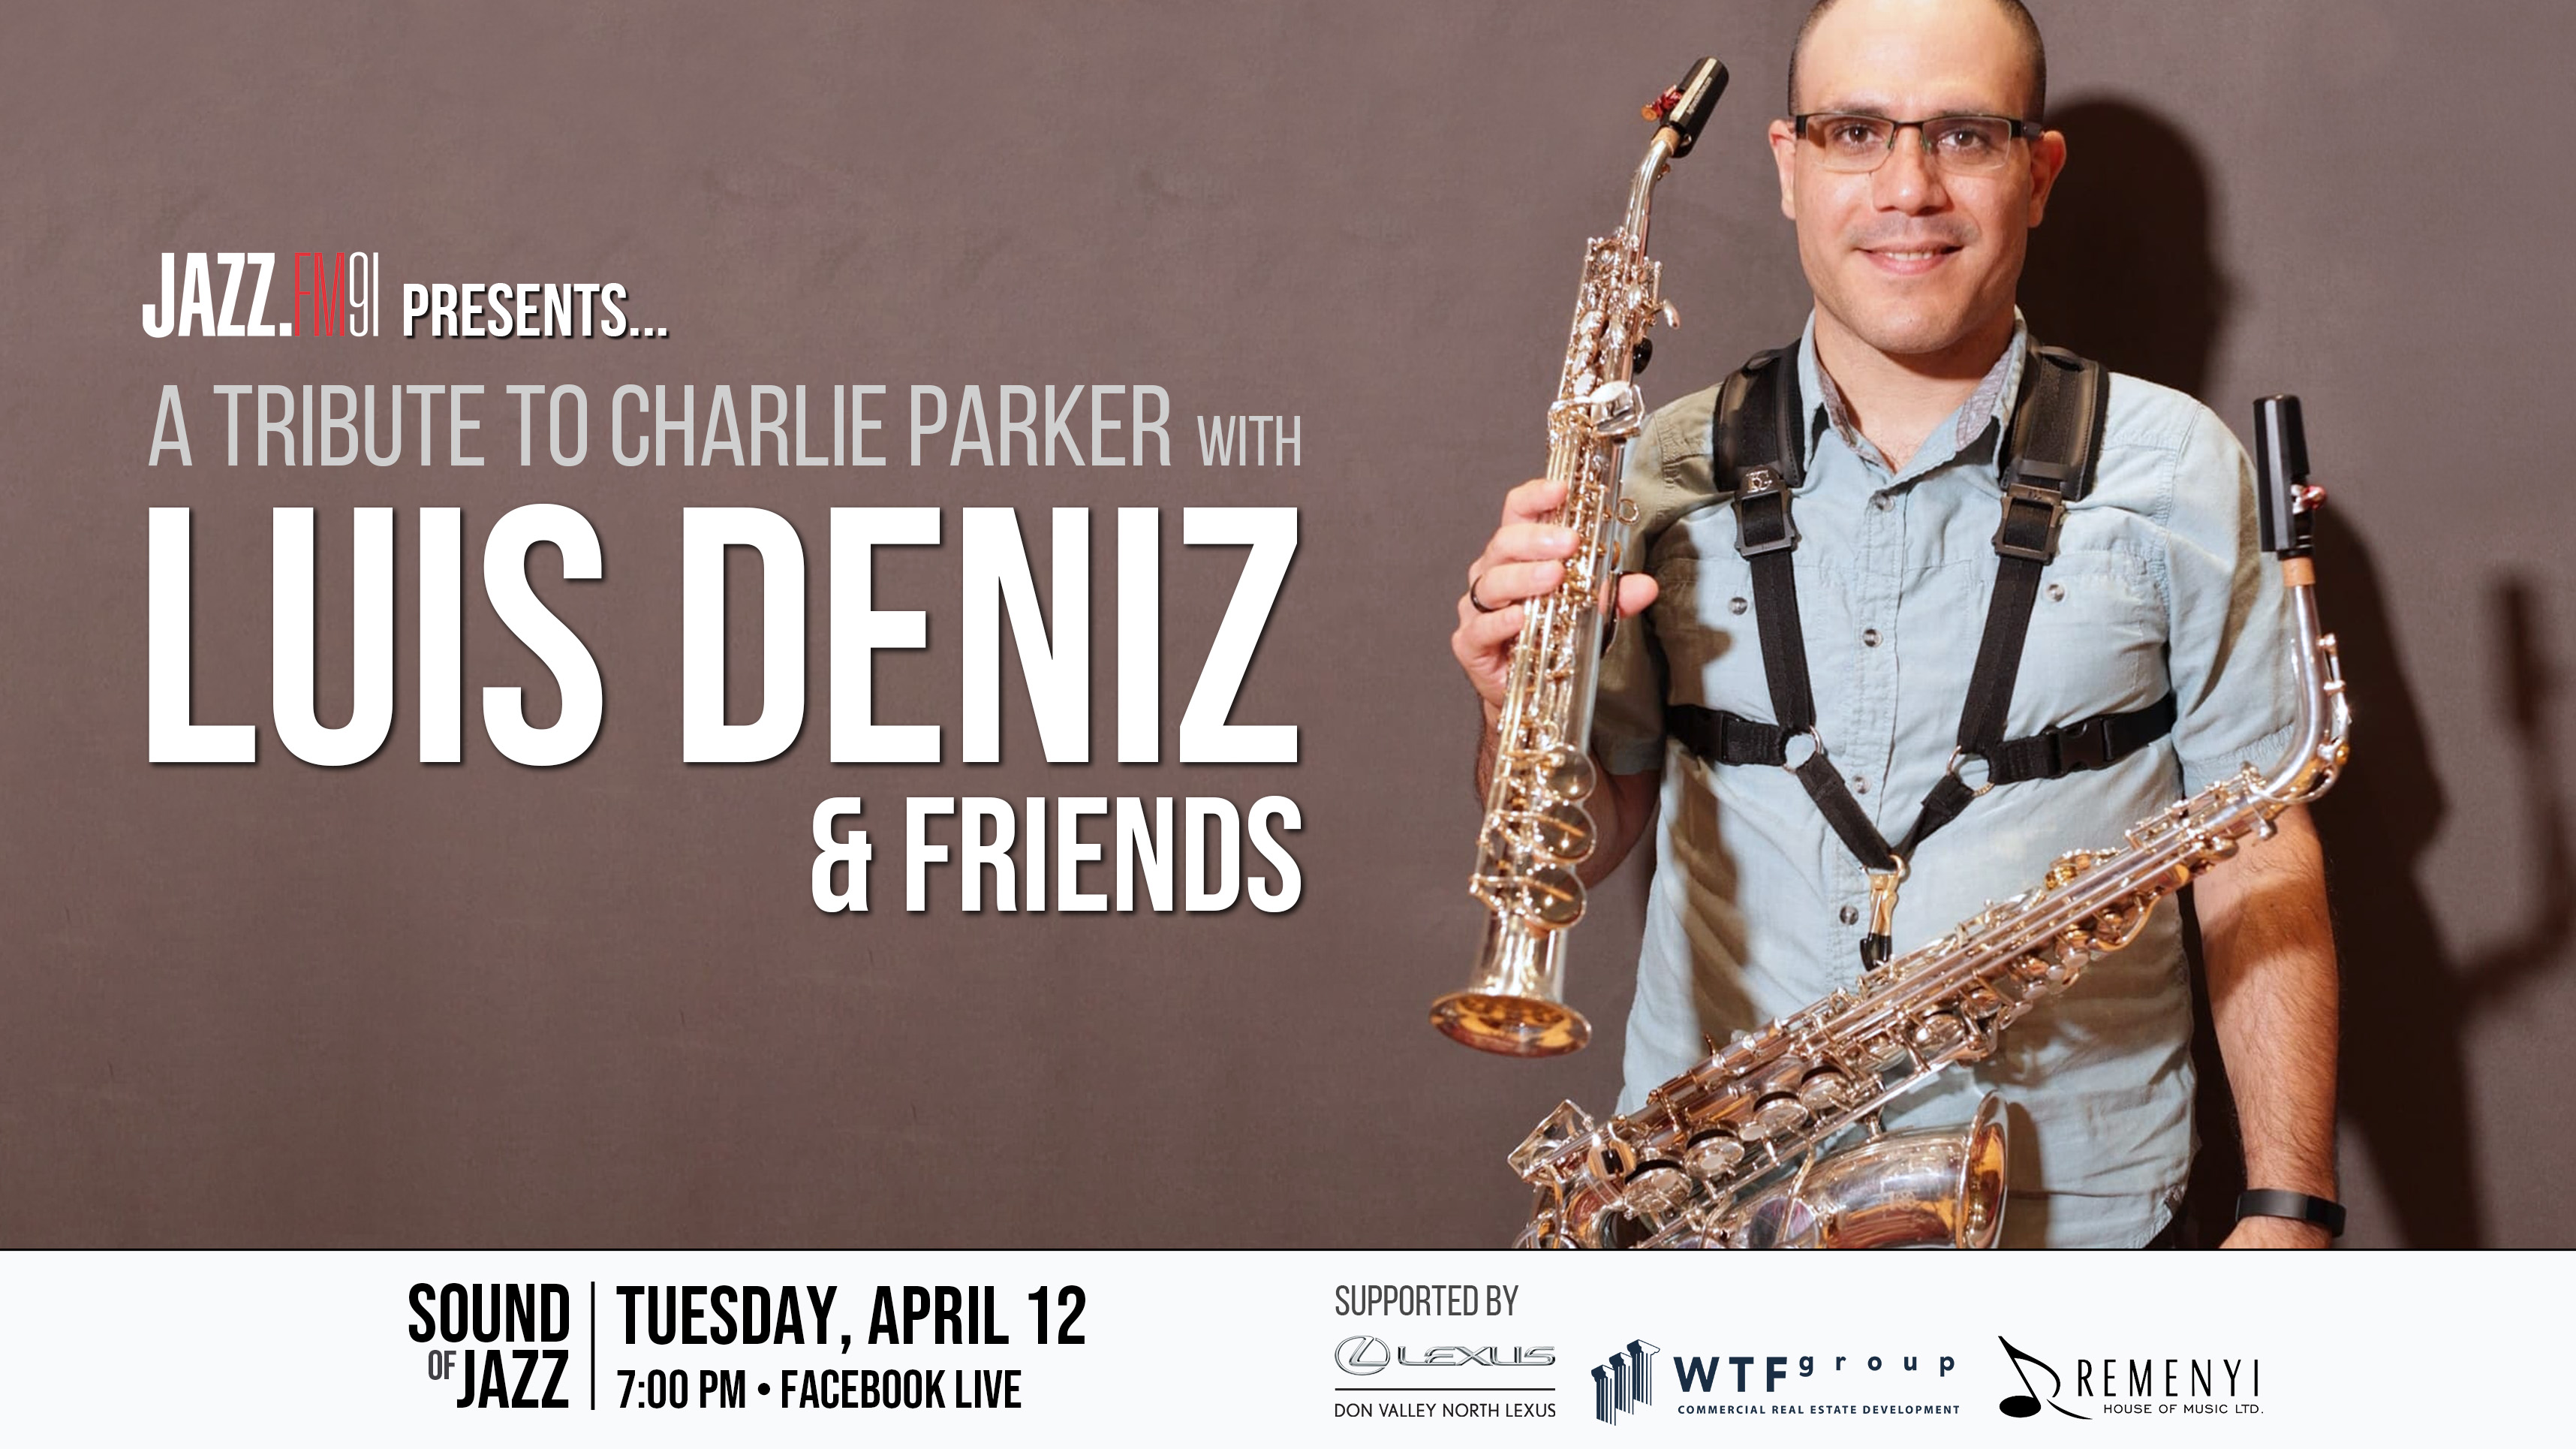 Sound of Jazz: A Tribute to Charlie Parker with Luis Deniz & Friends